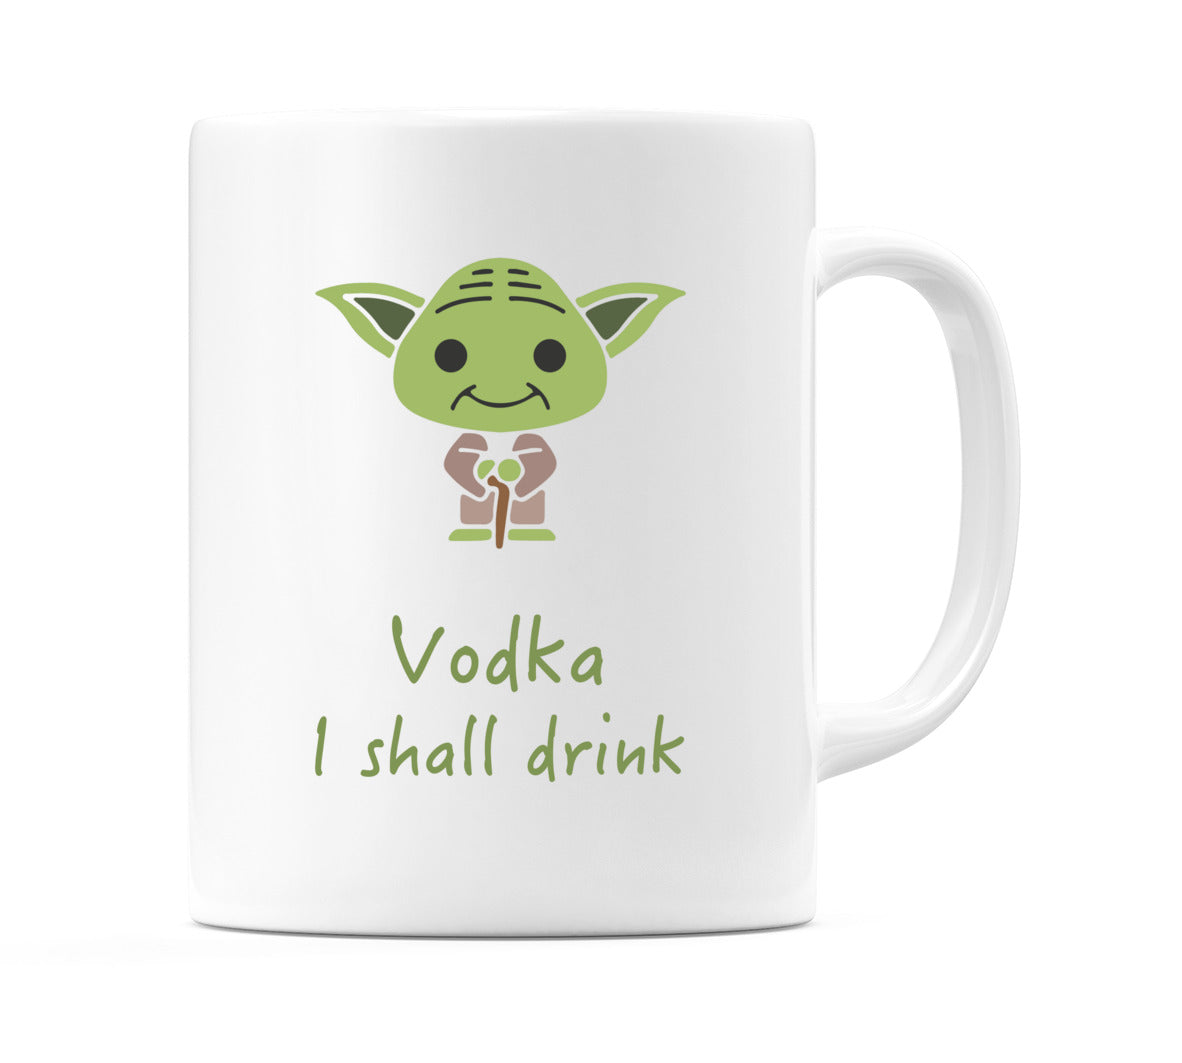 Vodka I shall drink Mug